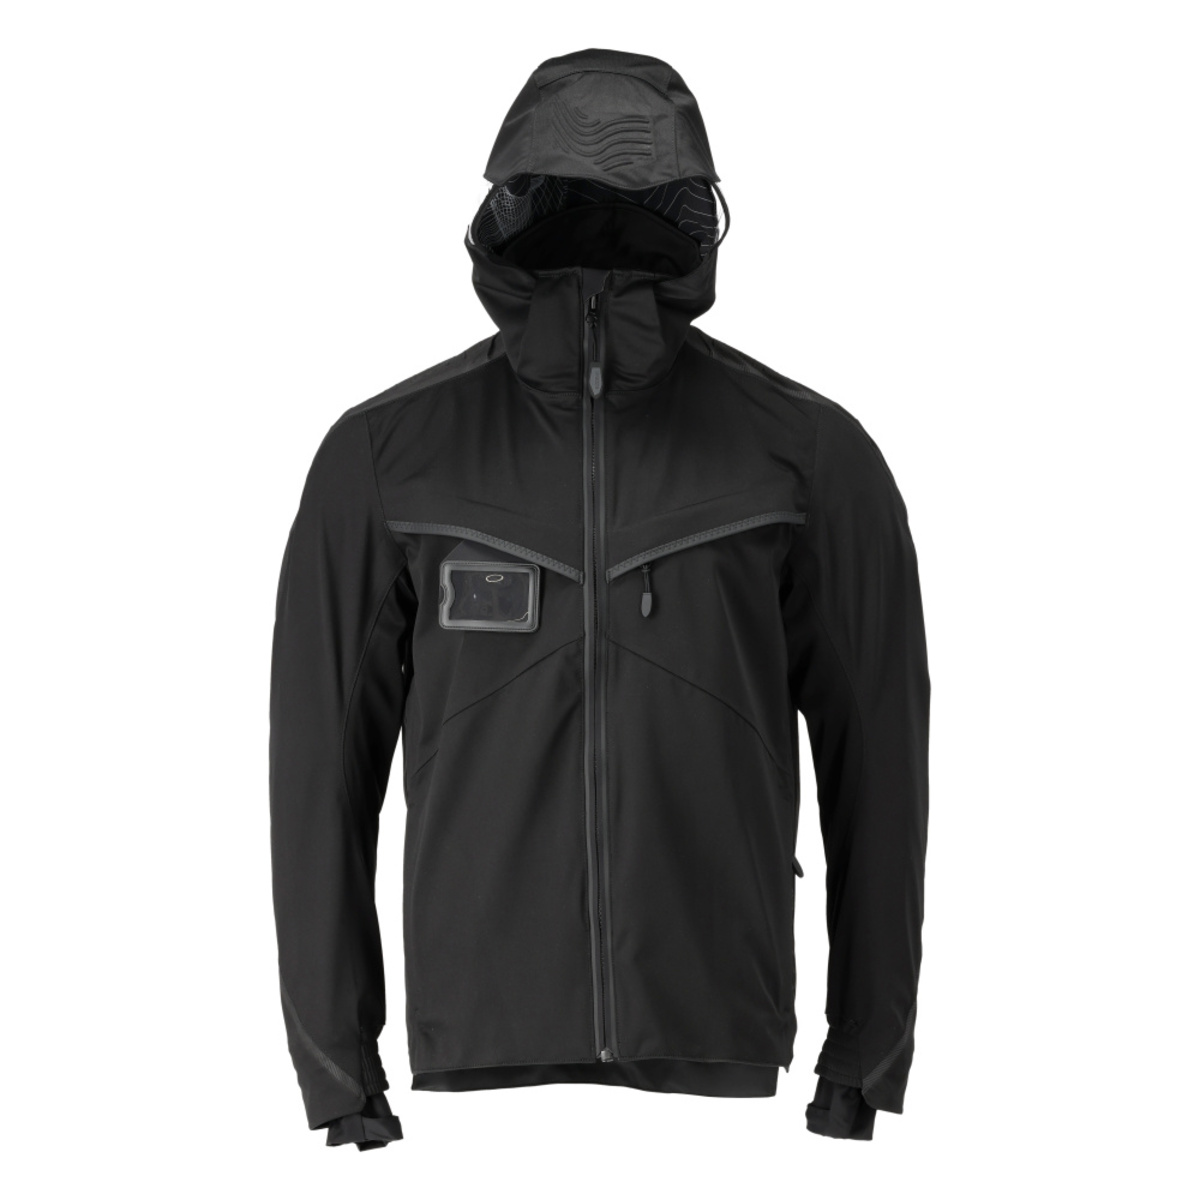 Mascot Workwear Outer Shell Jacket - Black | Order Uniform UK Ltd